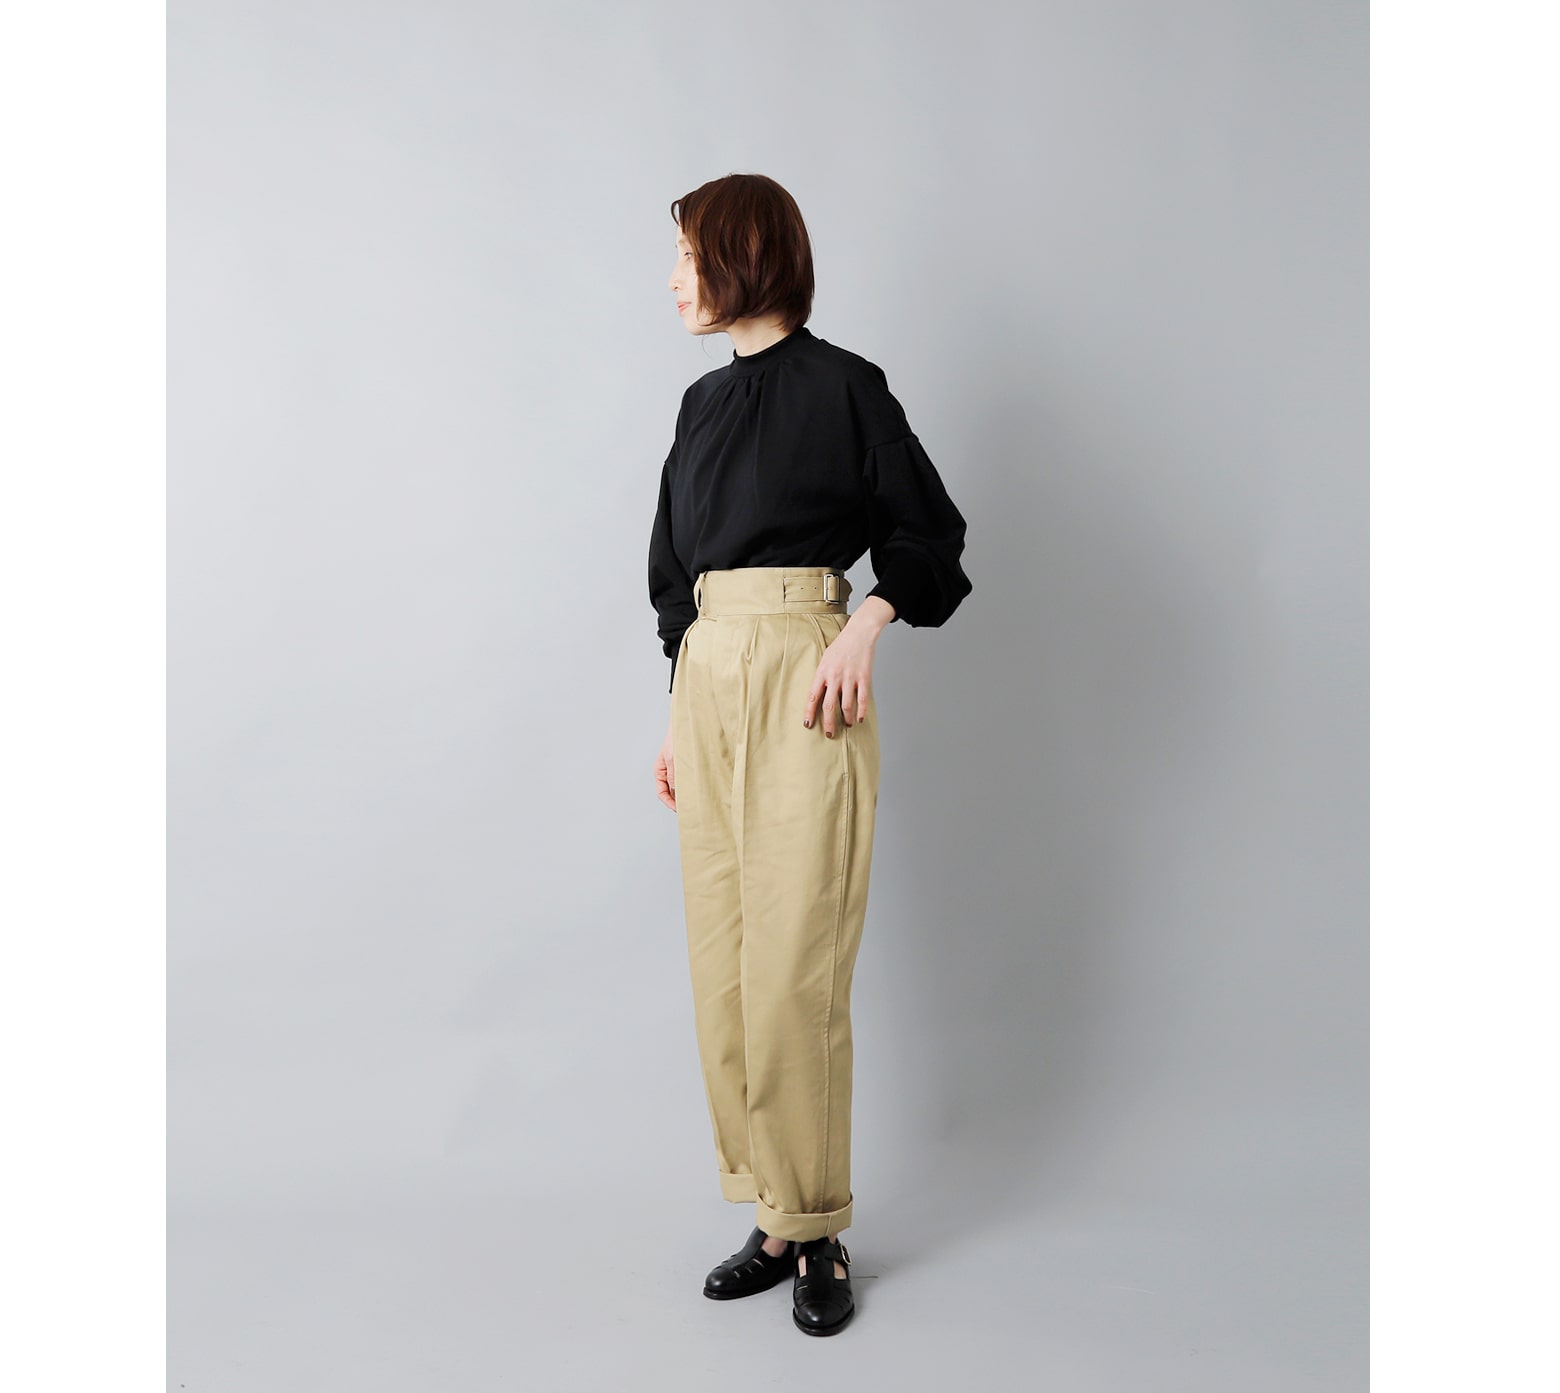 LENO(リノ)グルカトラウザーズ”Gurkha Trousers” l1901-pt003 | iroma 